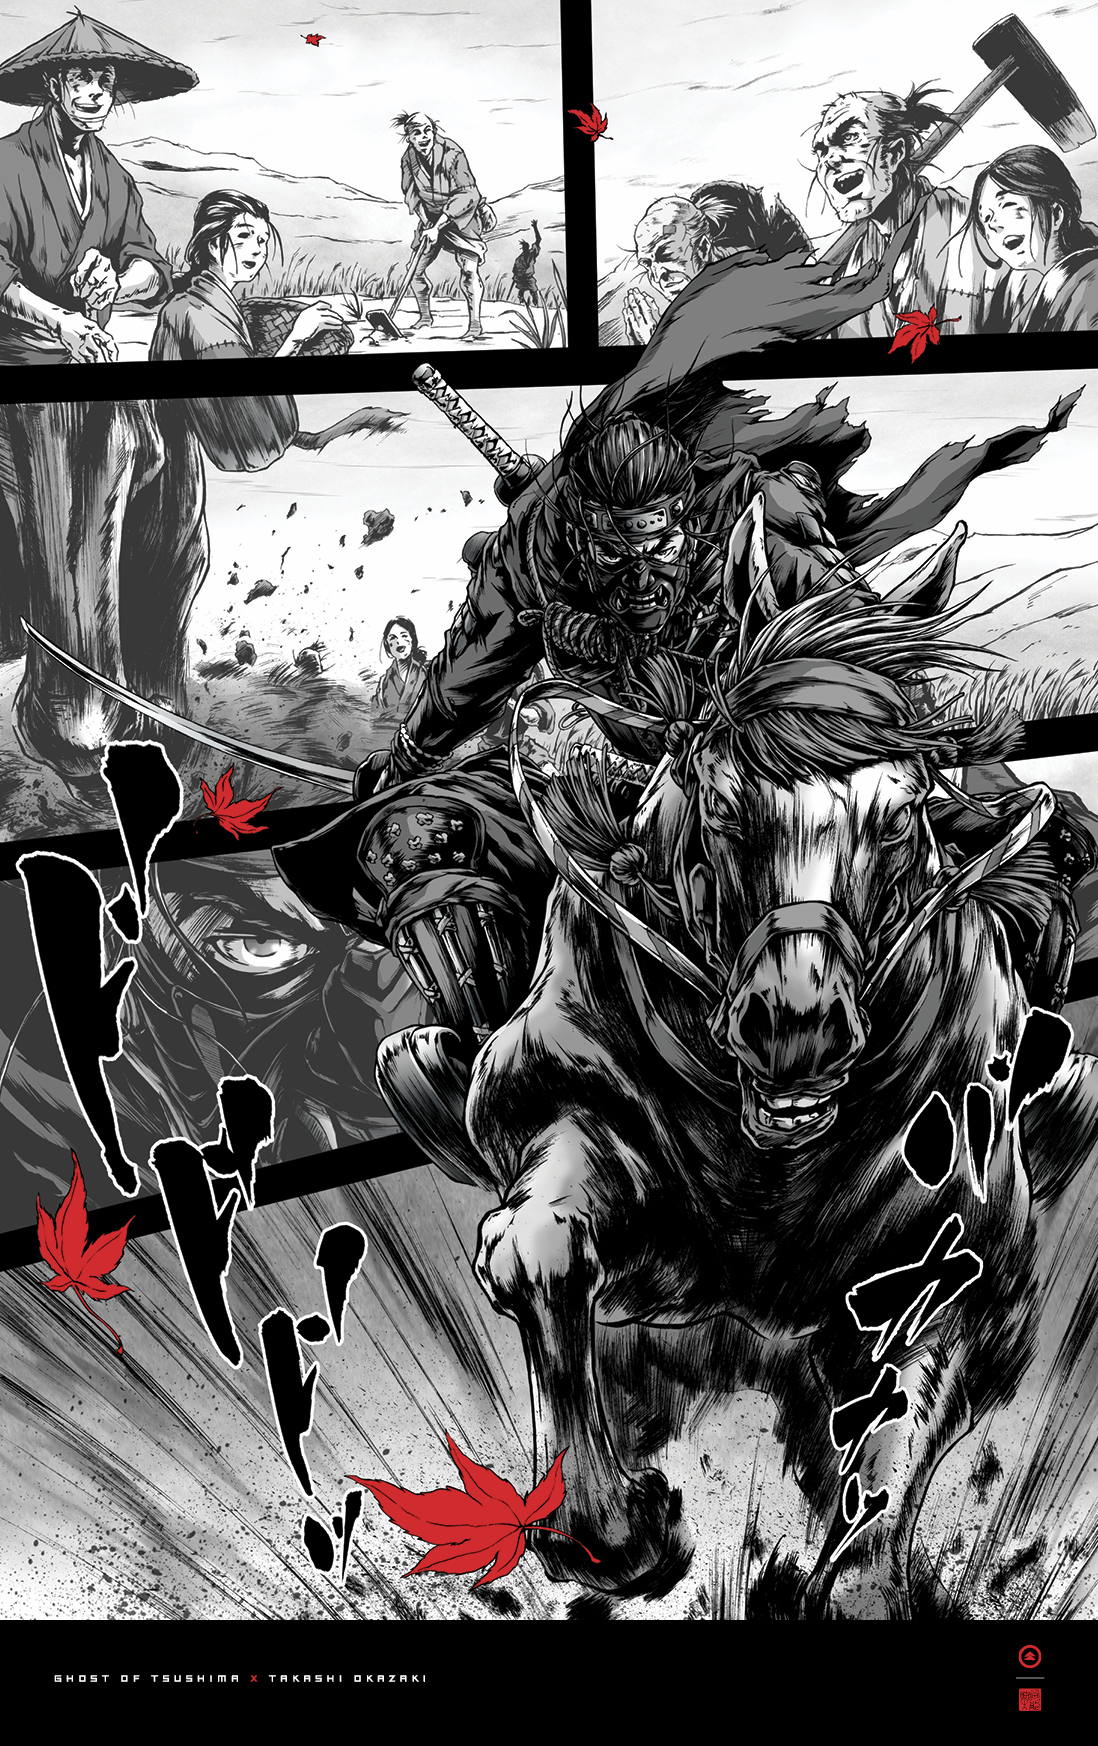 Afro Samurai Vol.1 (Graphic Novel) by Okazaki, Takashi